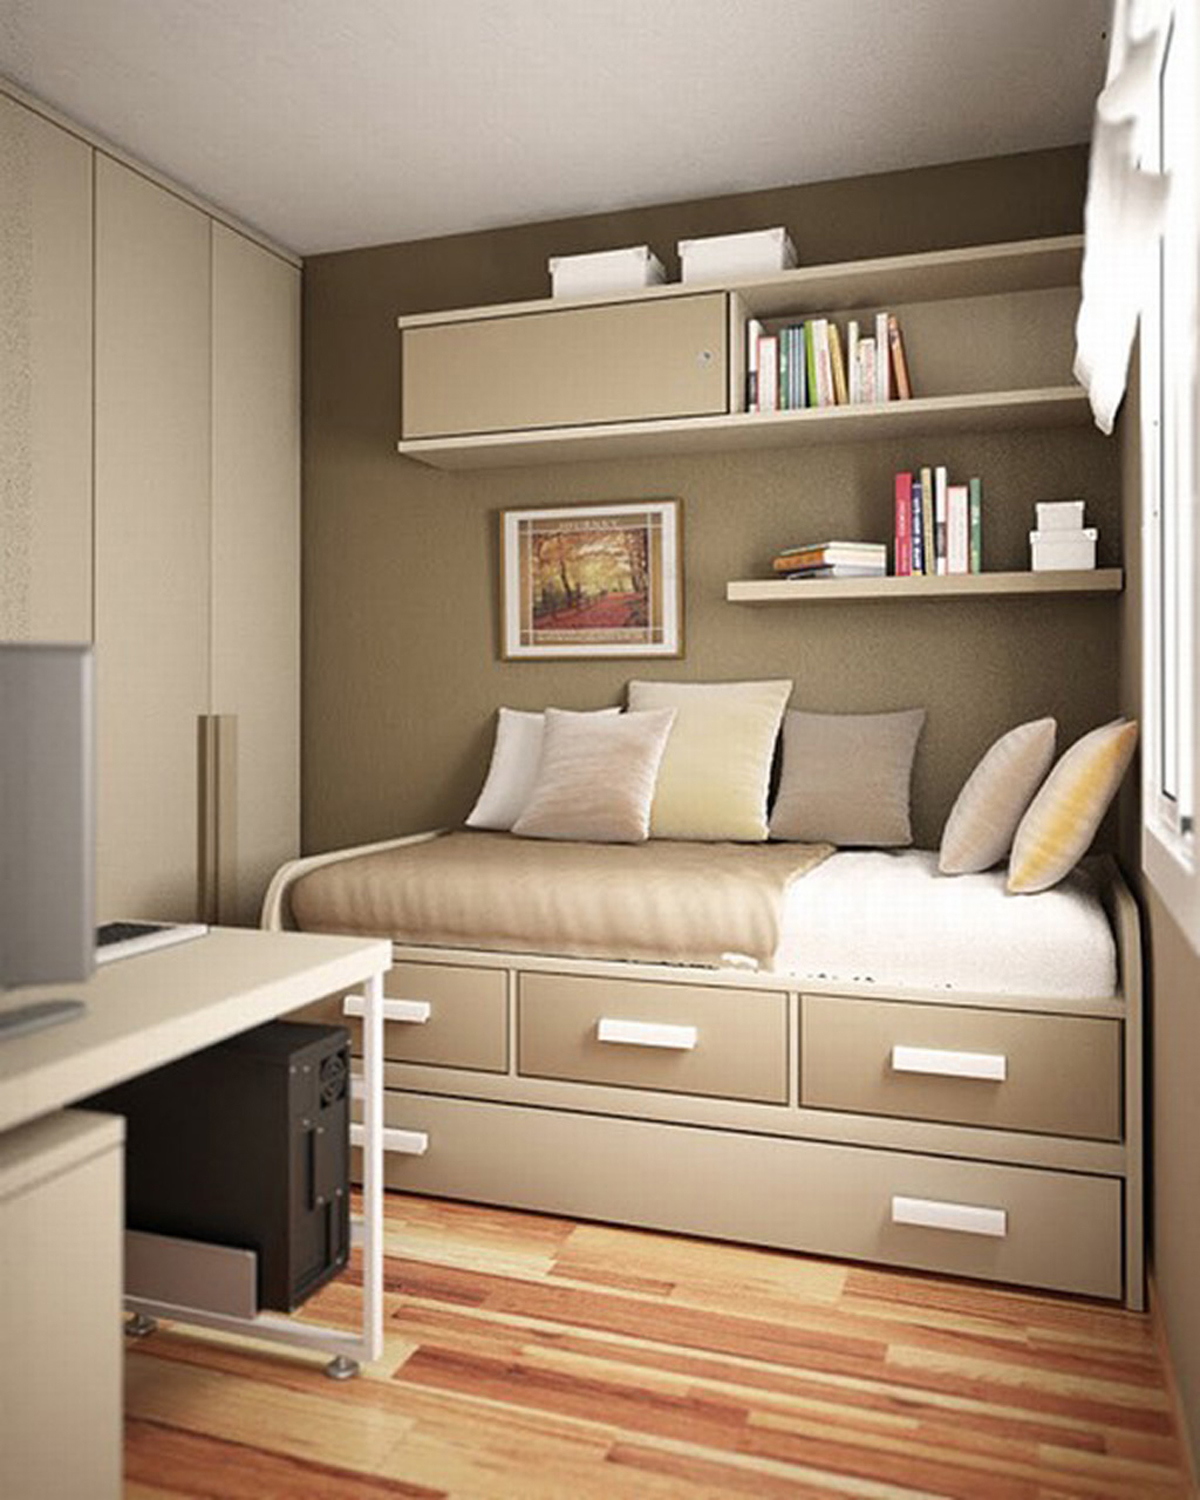 Best Modern Bedroom Design Ideas For Small Bedrooms